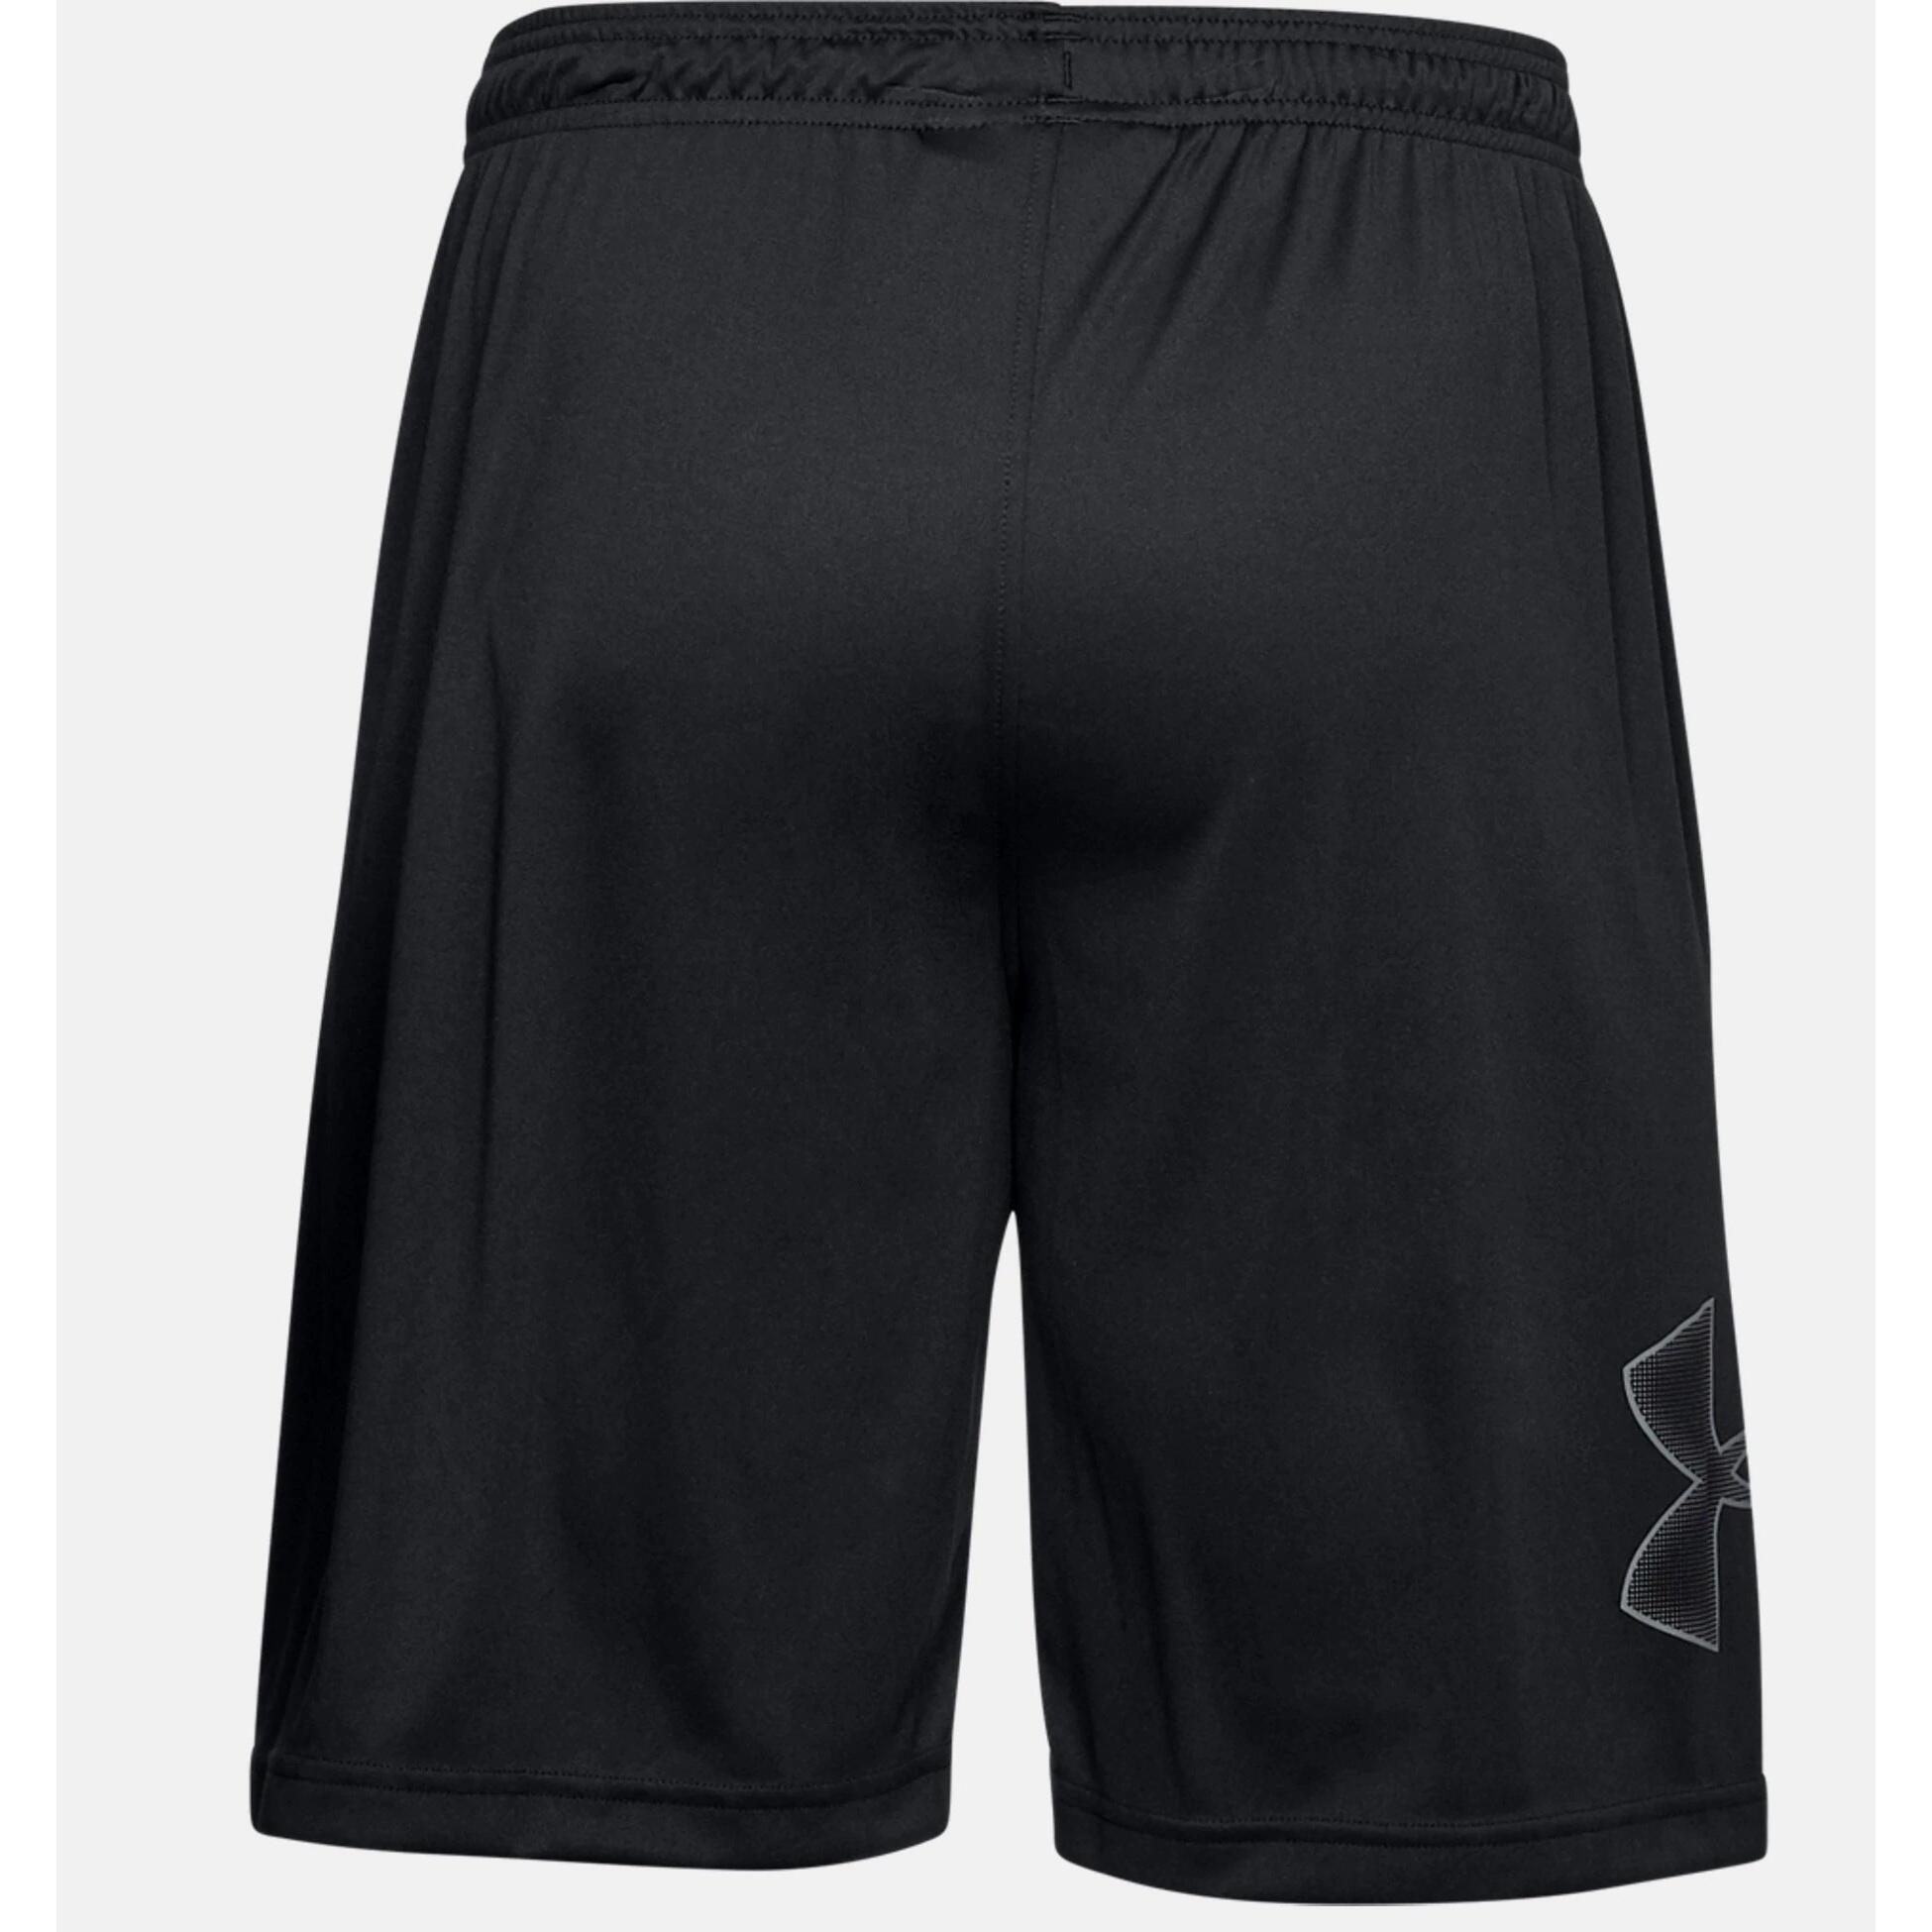 Mens Tech Shorts (Black/Light Graphite) 2/4